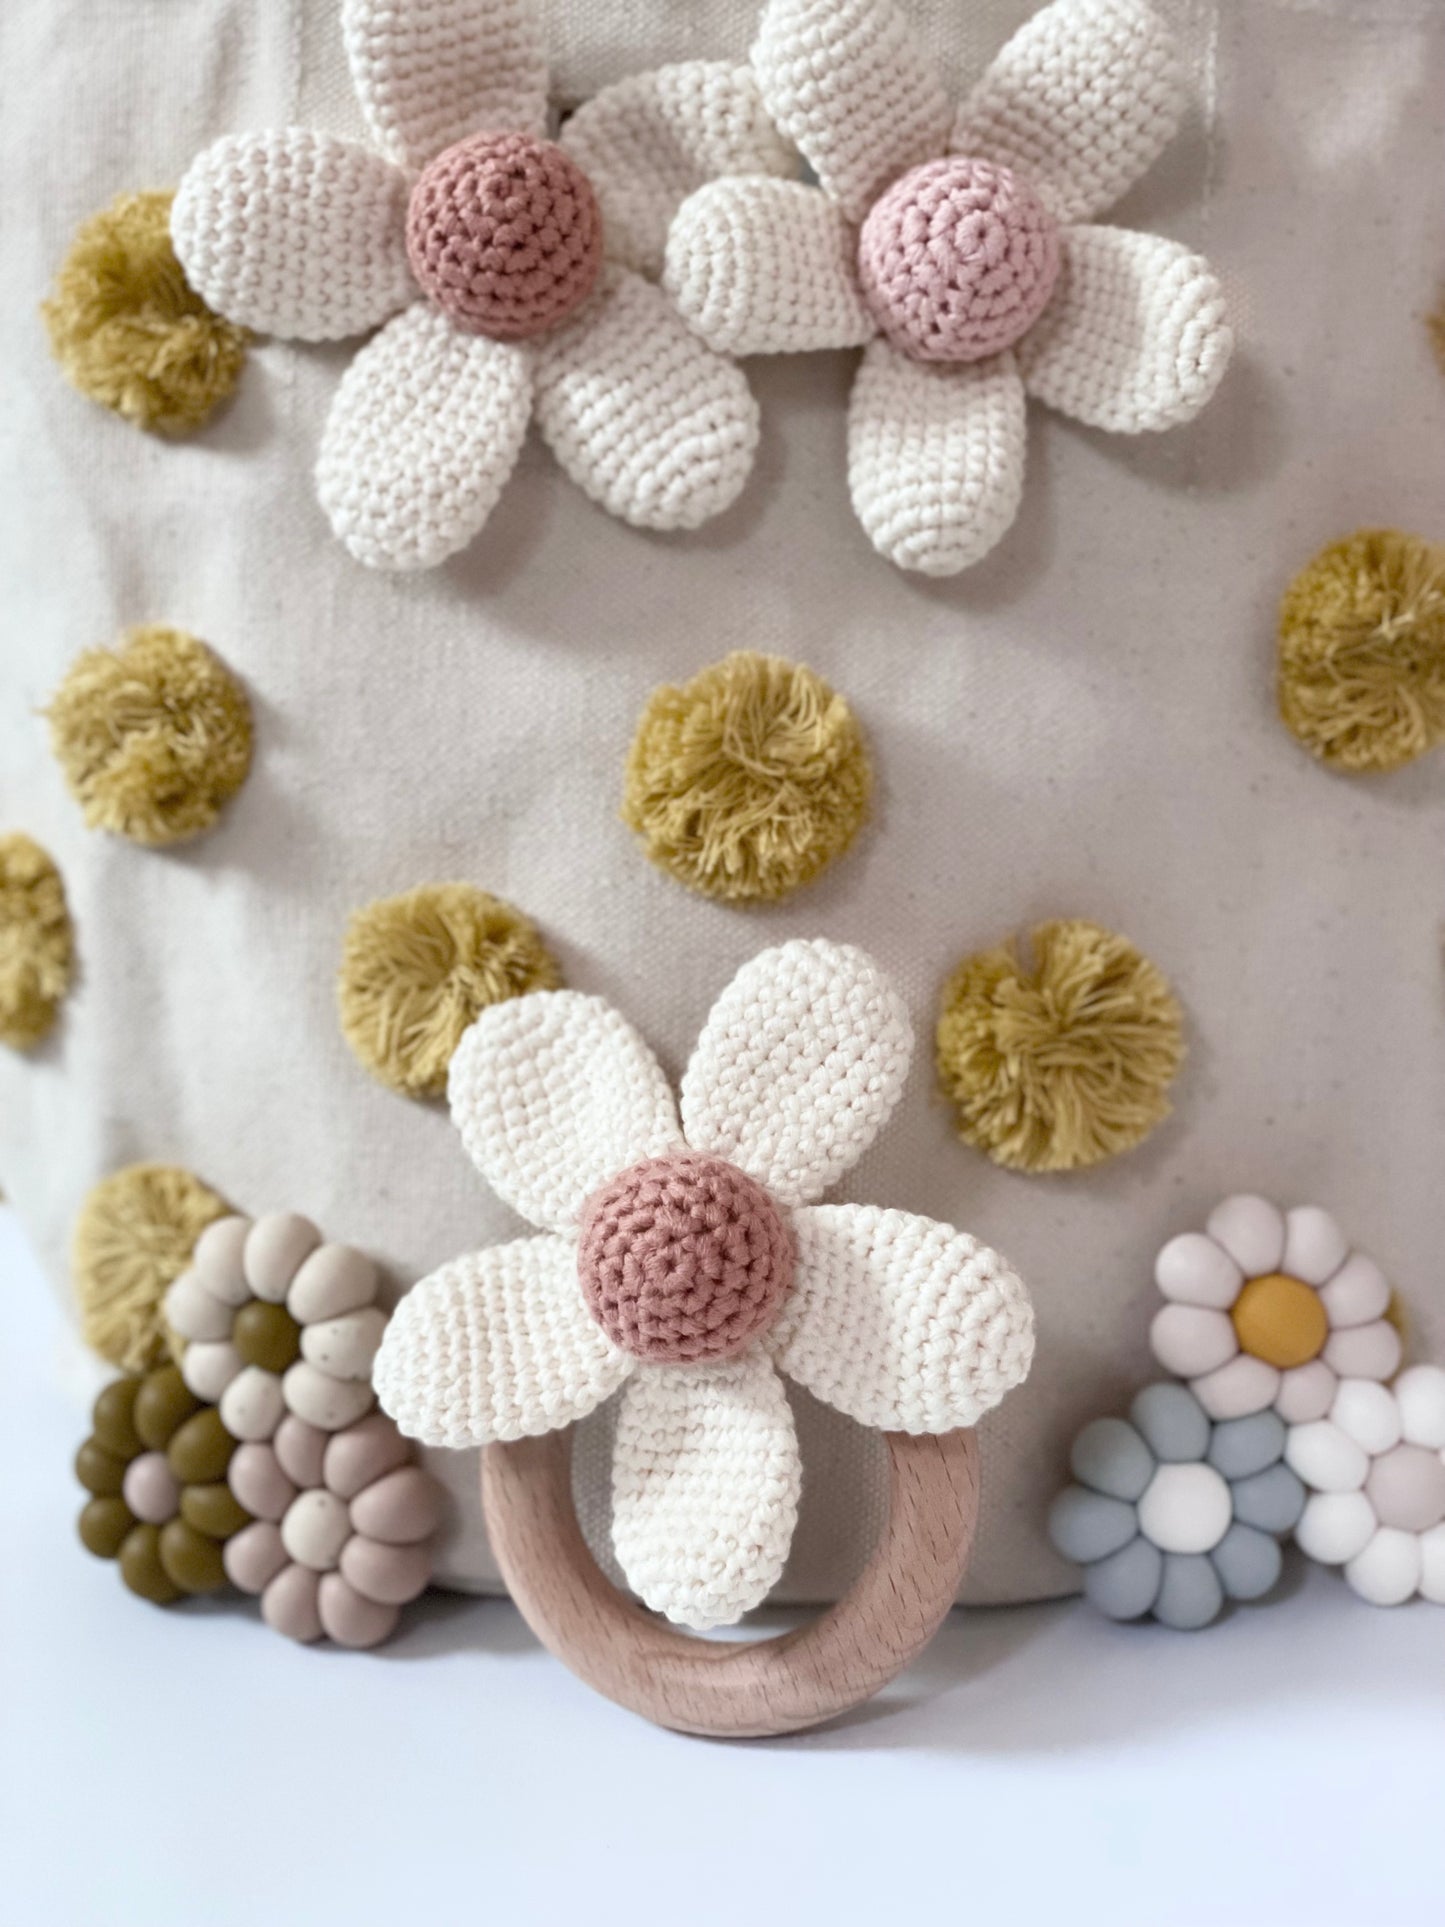 Daisy Crochet Rattle